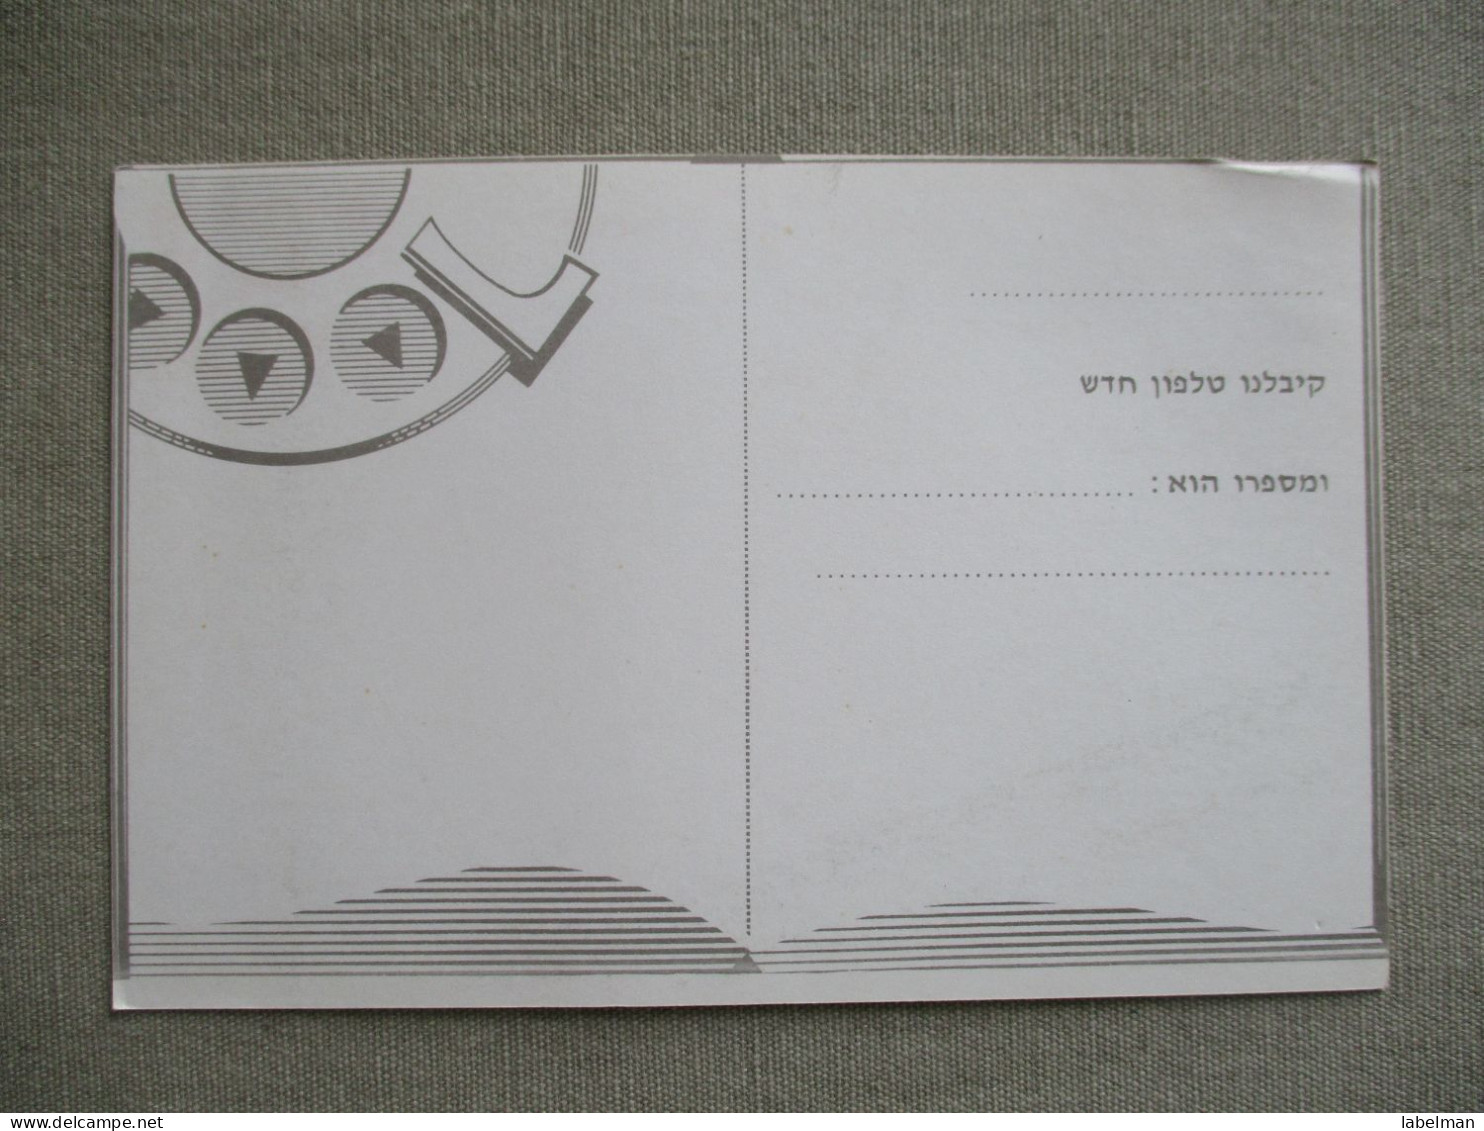 ISRAEL POSTAL AUTHORITY INLAND PREPAID POSTCARD POSTKARTE CARD ANSICHTSKARTE CARTOLINA CARTE POSTALE PC CP AK - Maximum Cards